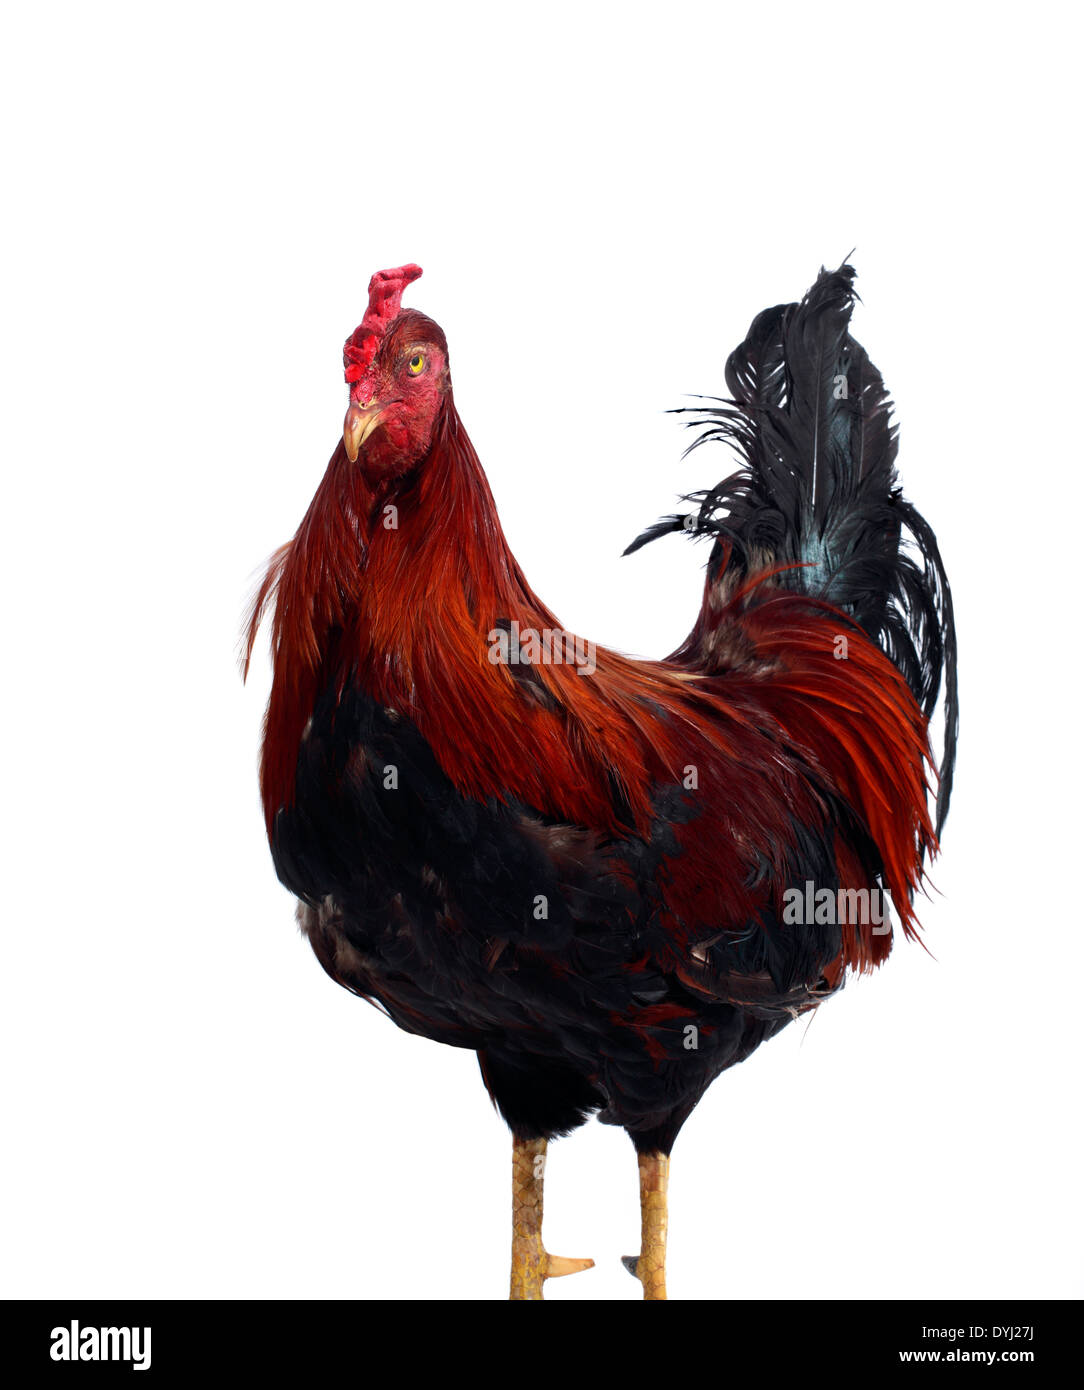 Foto de estudio de un retrato de un gallo o pollo Foto de stock